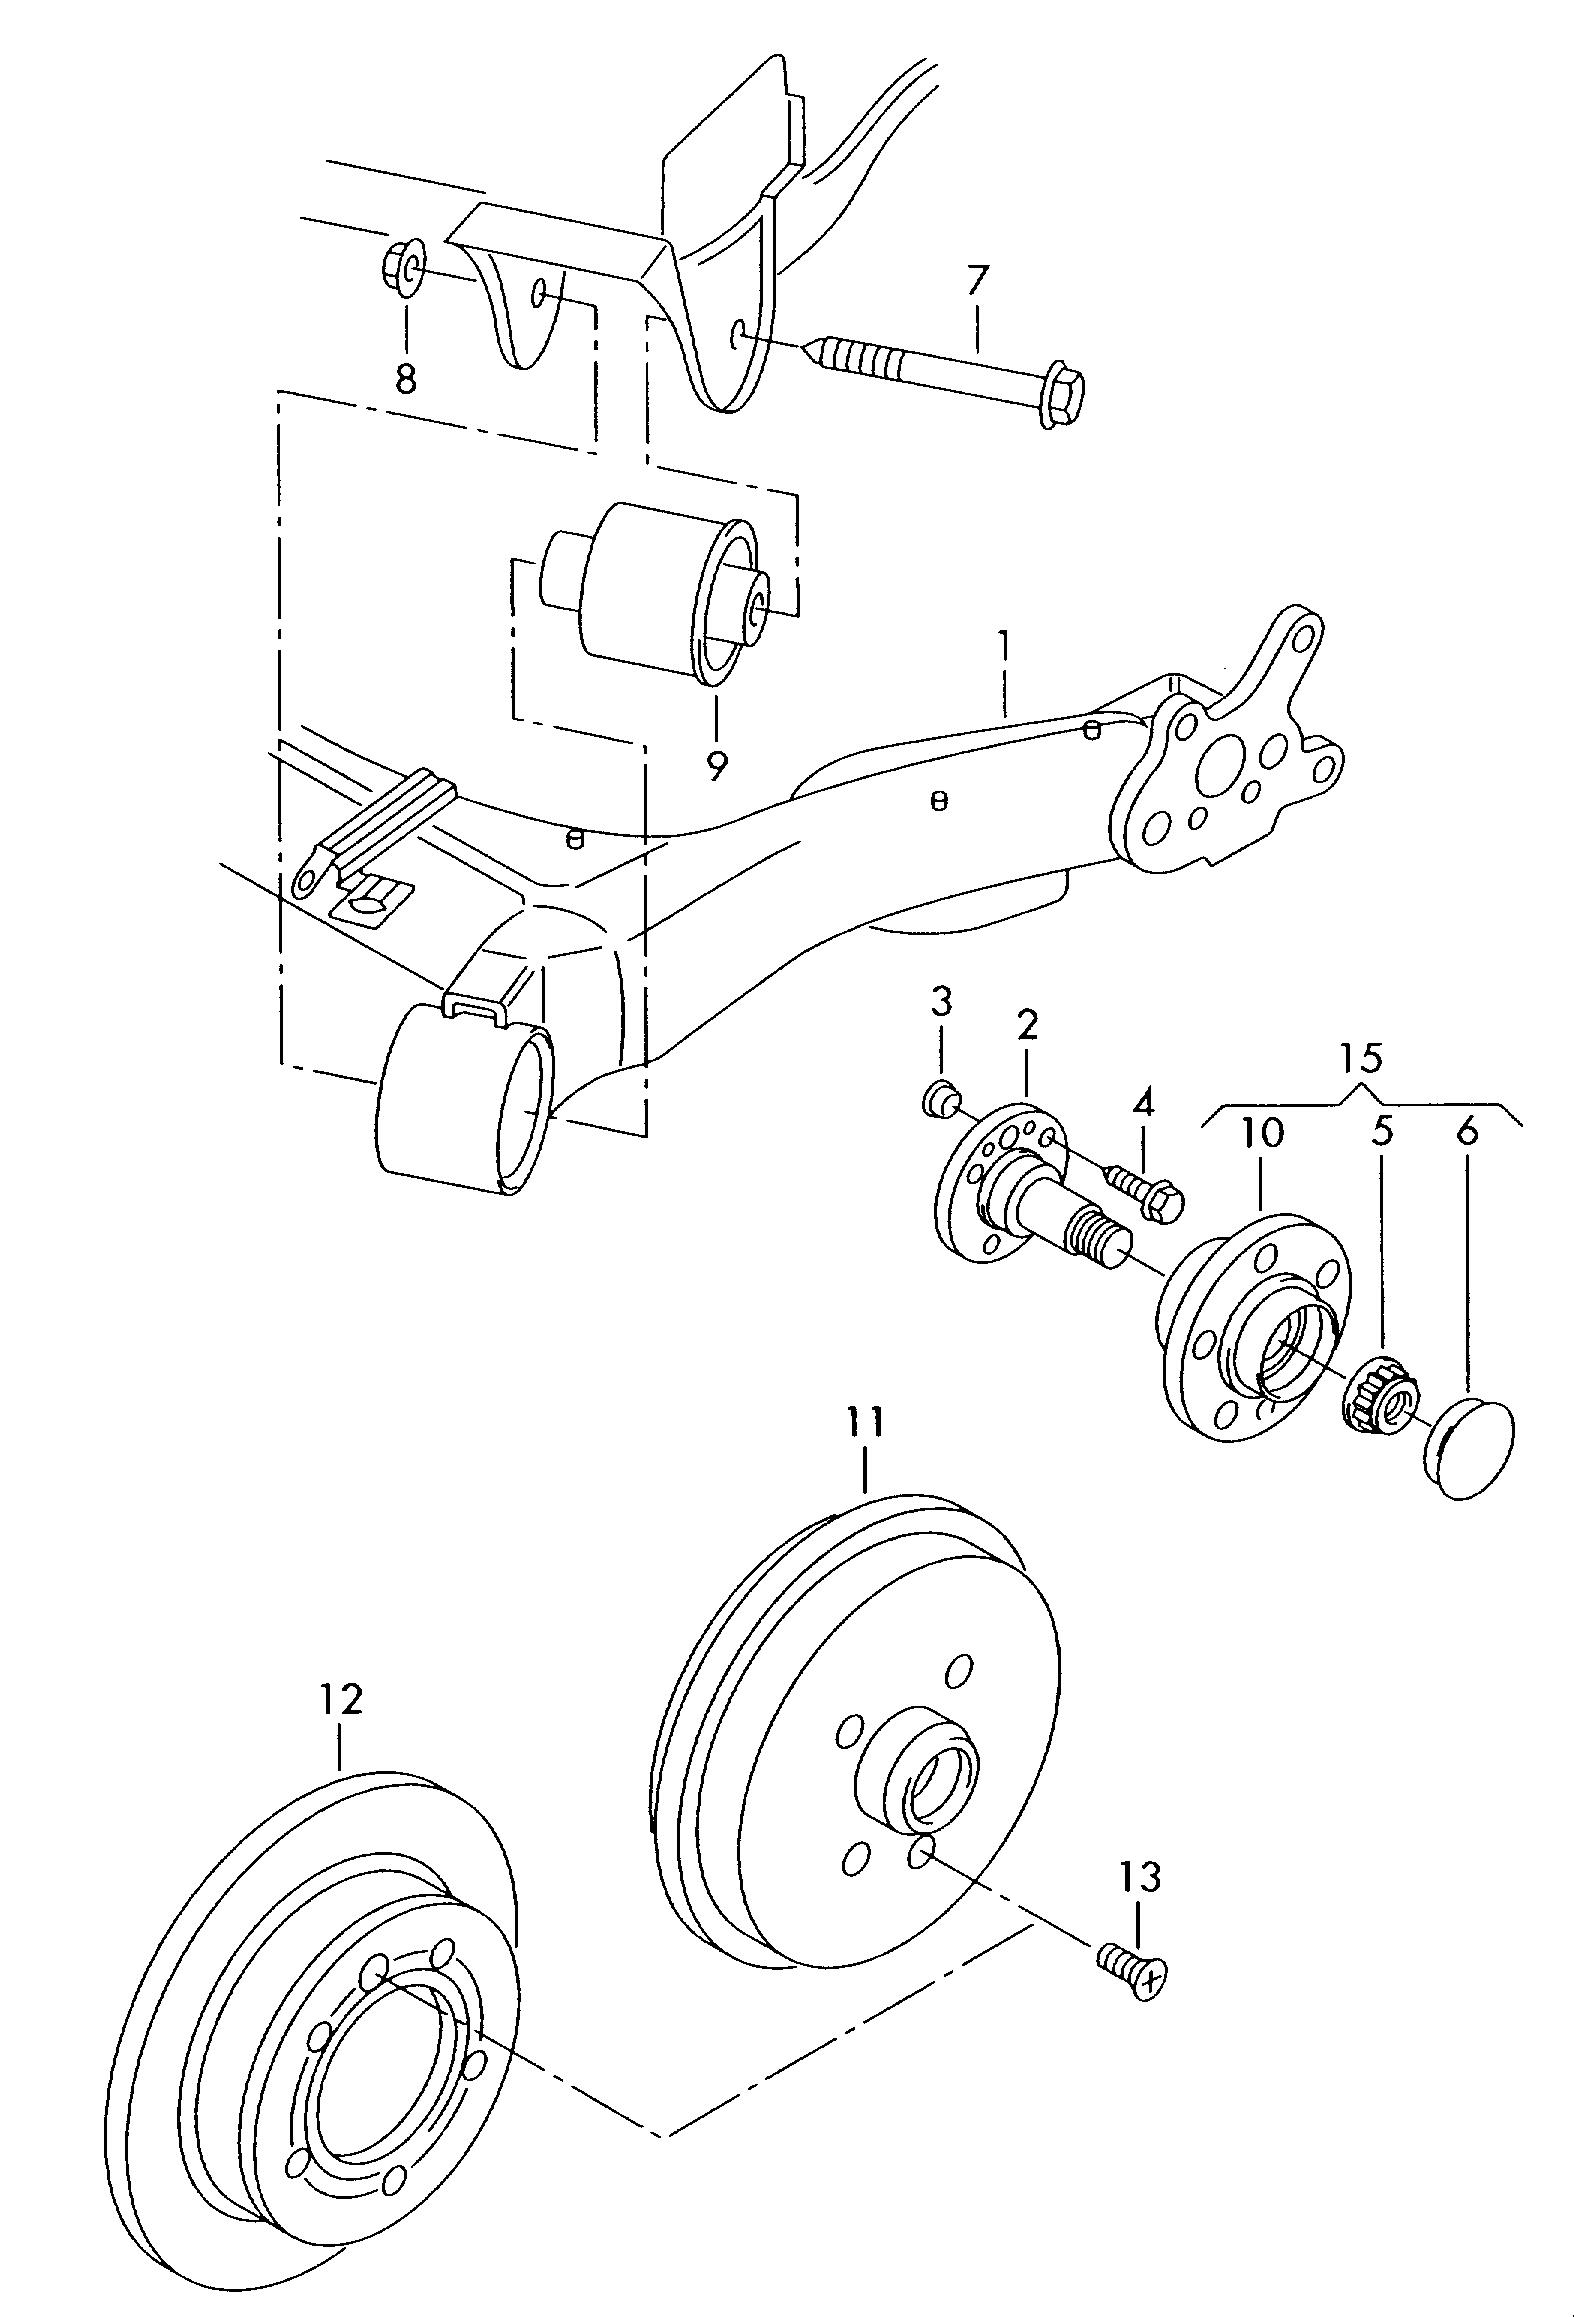 rear axle beam with attachment
parts - Polo/Derby/Vento-IND(PO)  